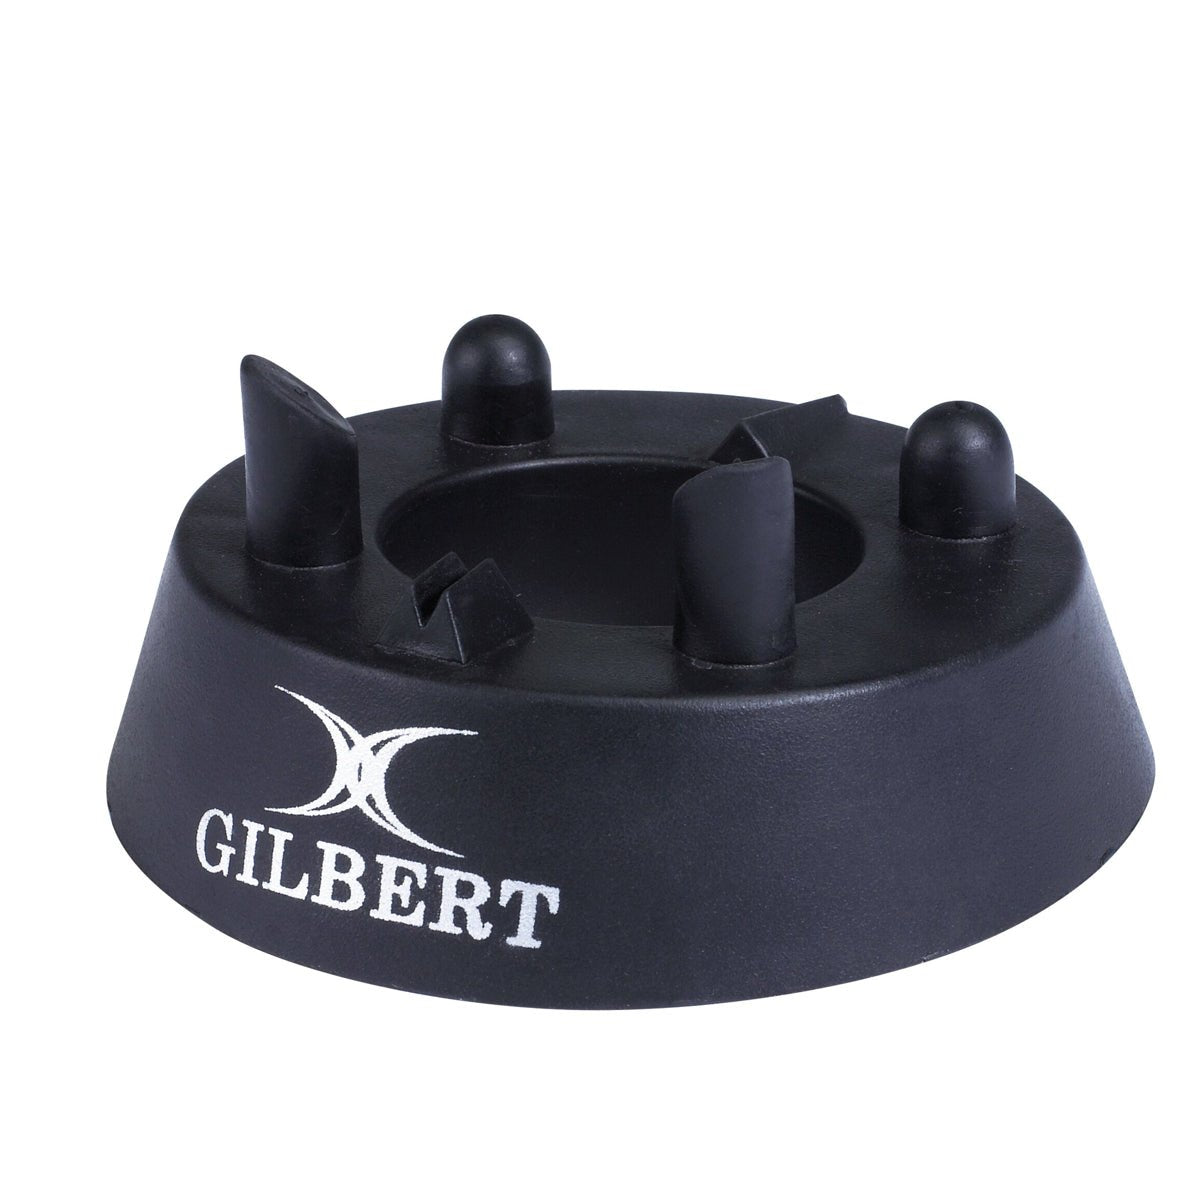 Gilbert Rugby Kicking Tee - 450 Black - Kiwisport.de